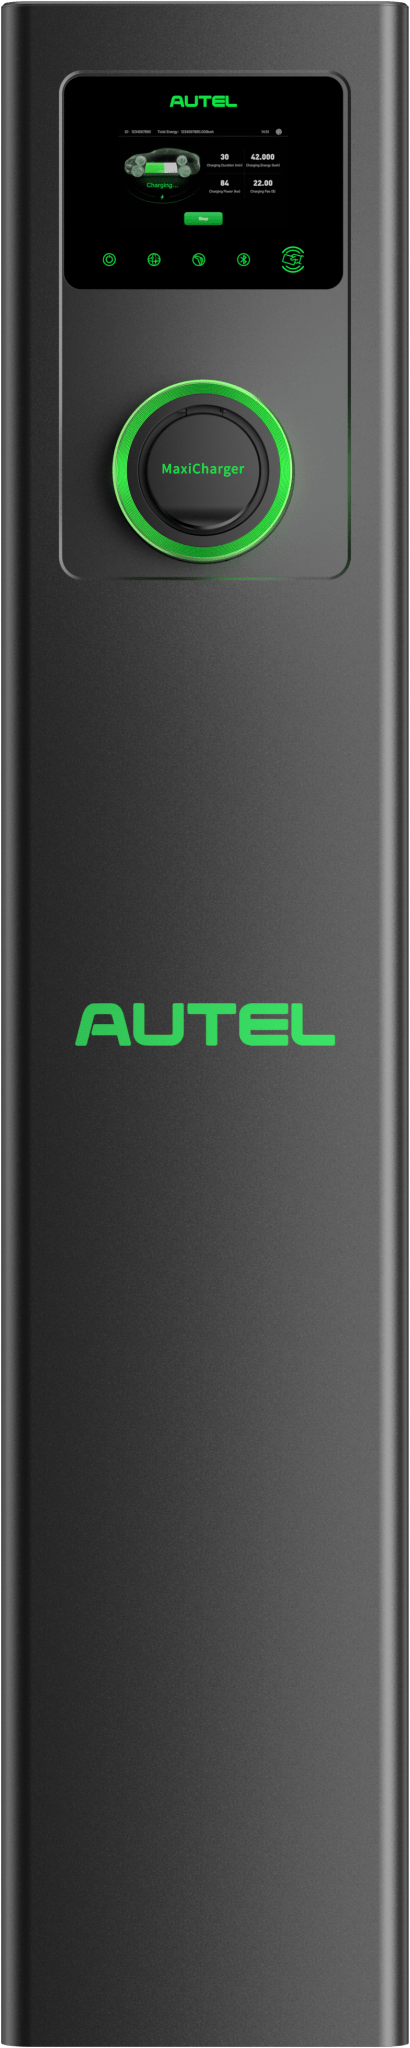 Autel AC MaxiCharger Wallbox, charging at 22kWh - #Blulinc#